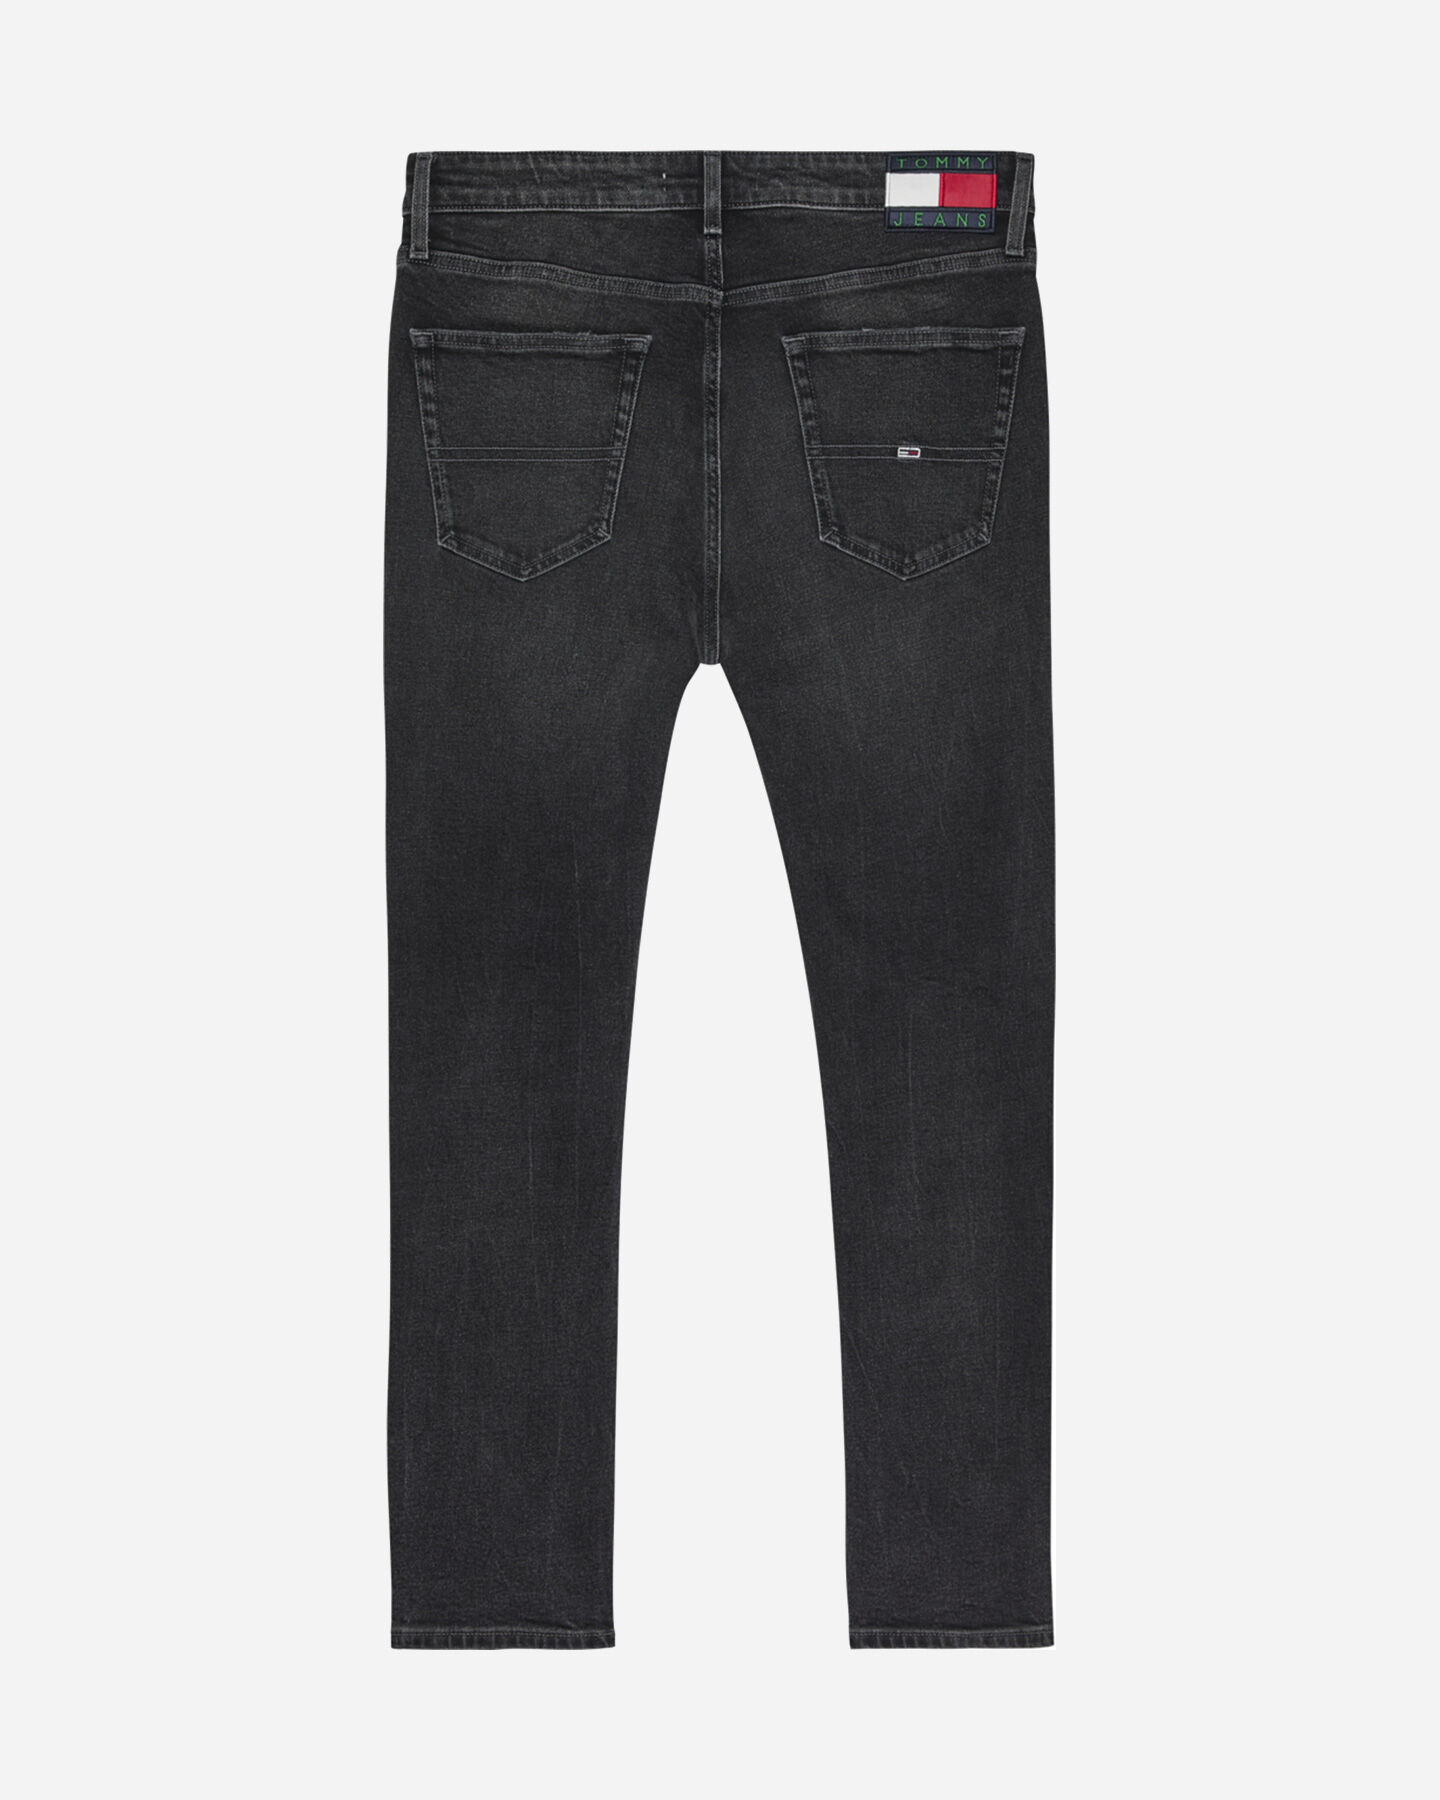  Jeans TOMMY HILFIGER AUSTIN SLIM M S4115250|1BZ|28 scatto 1